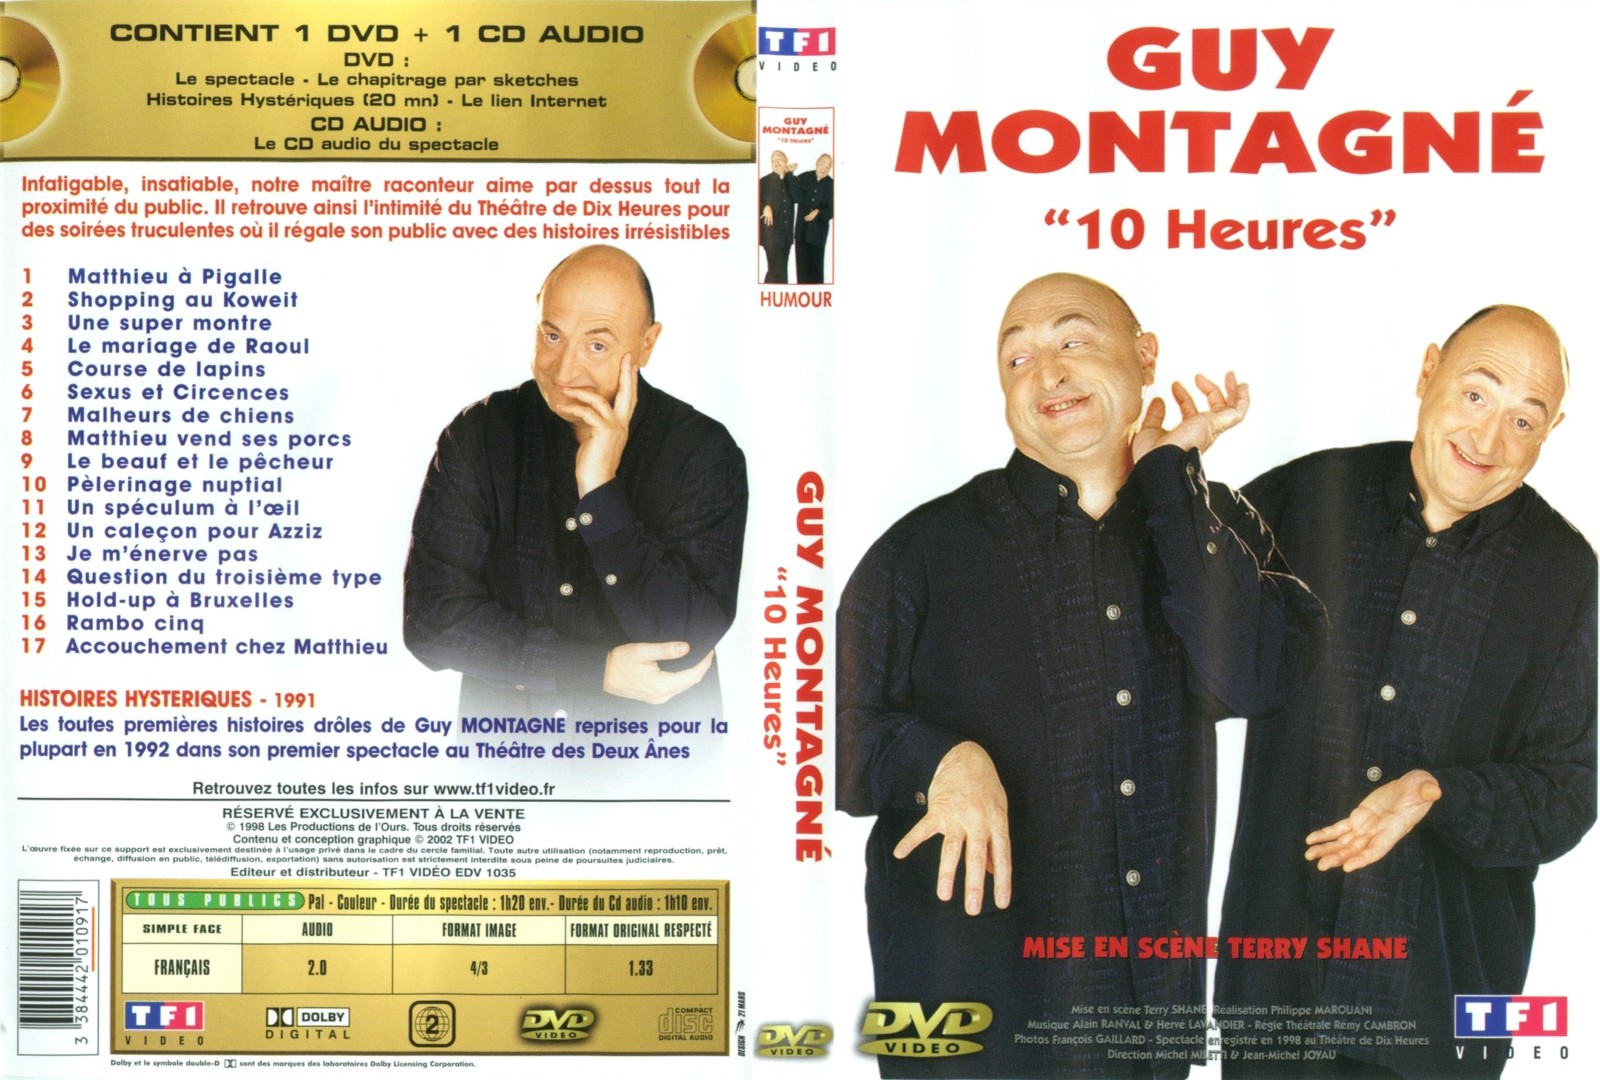 Jaquette DVD Guy Montagne 10 heures